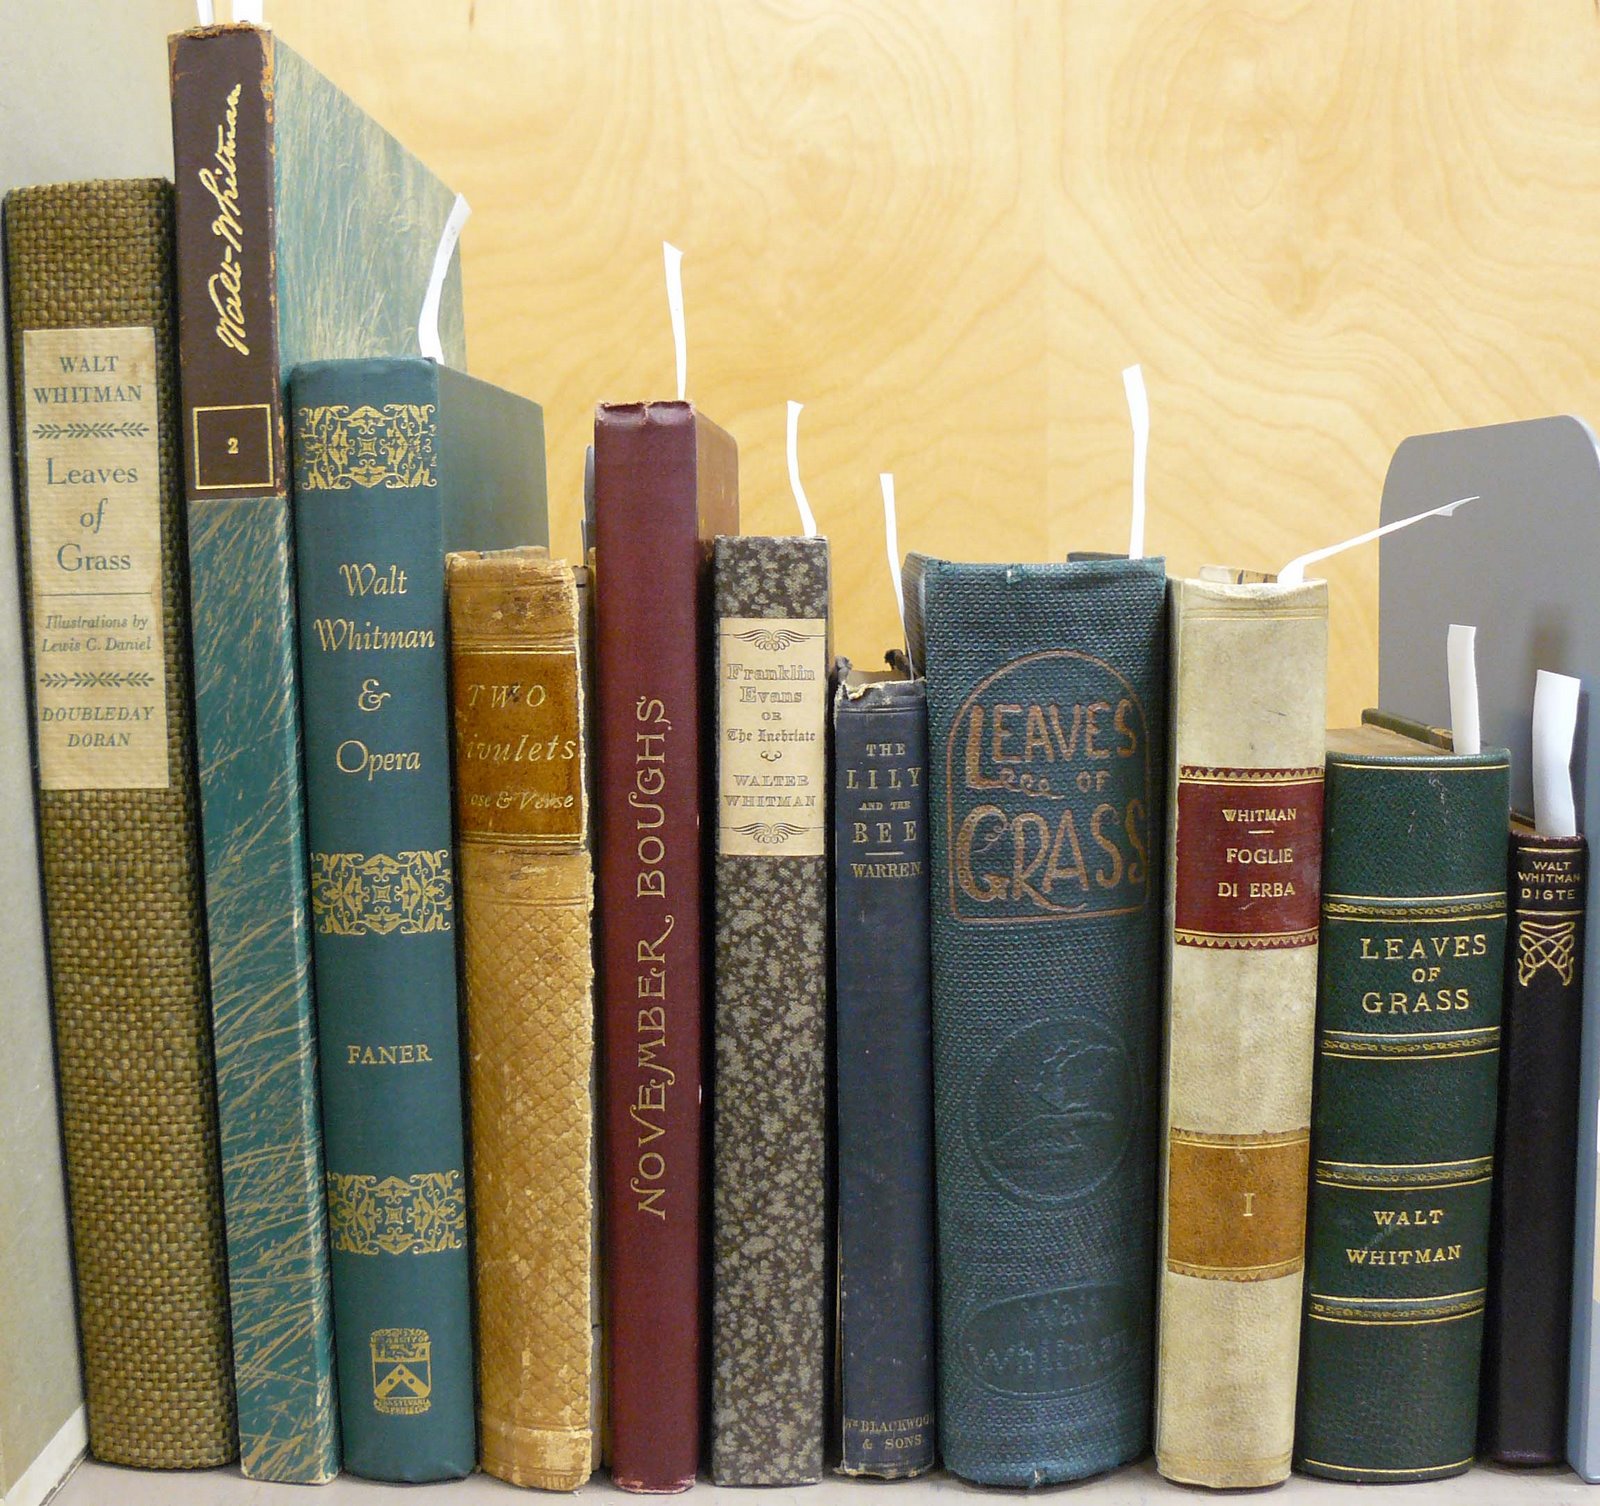 Spines of Walt Whitman books on a bookshelf 